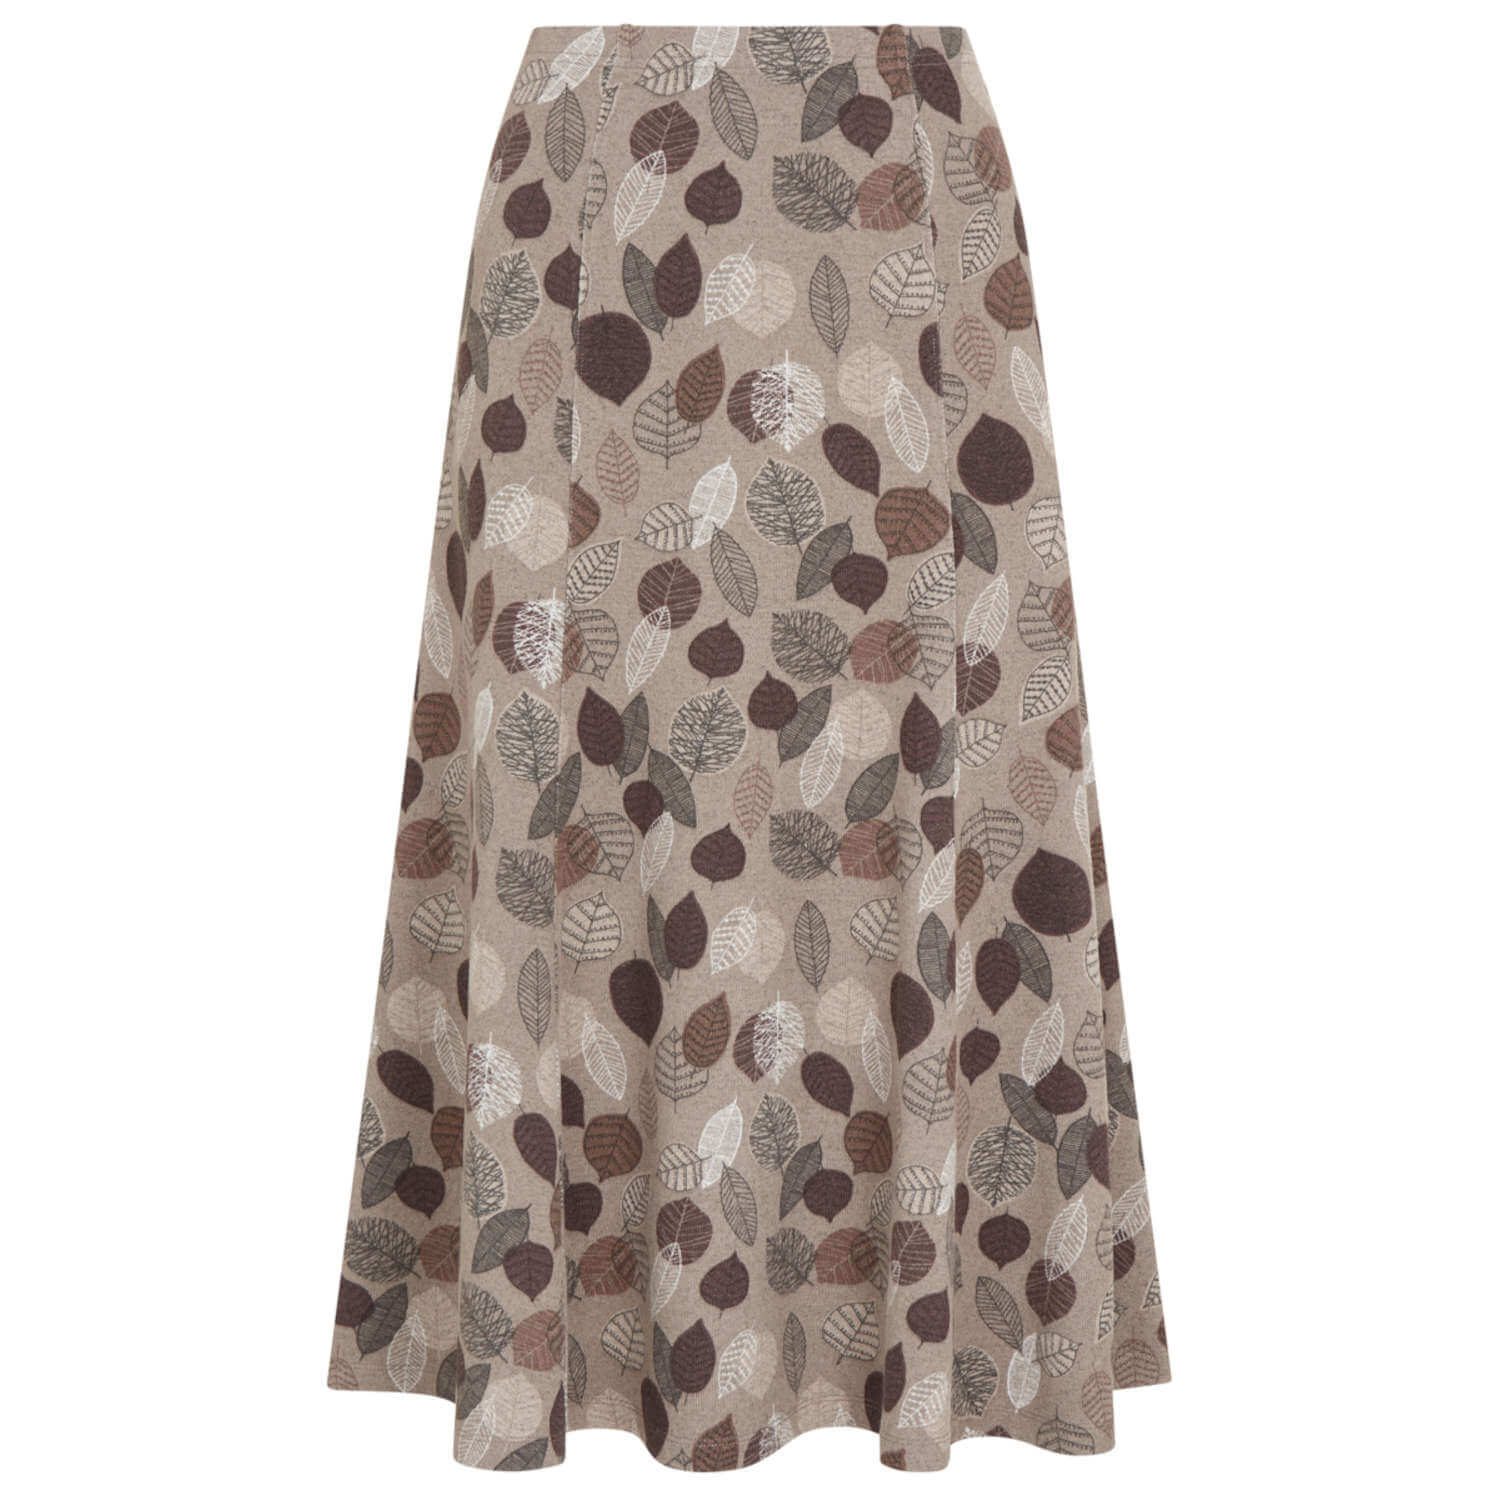 Tigiwear Leaf Print Skirt - Taupe 5 Shaws Department Stores